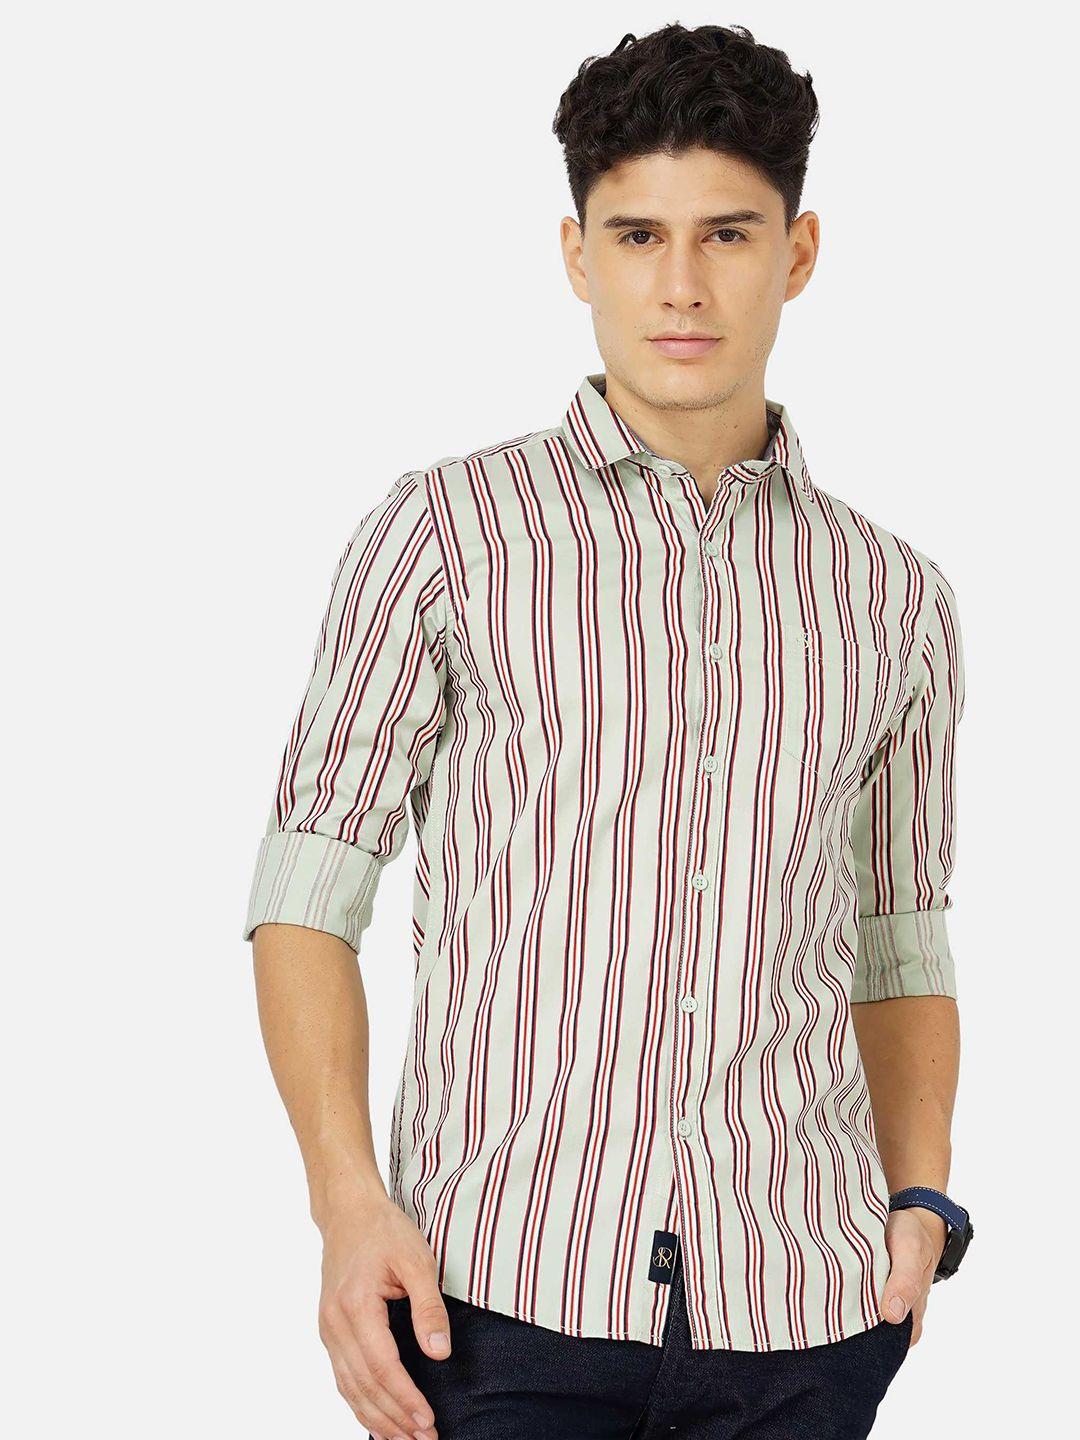 soratia men cotton striped casual shirt